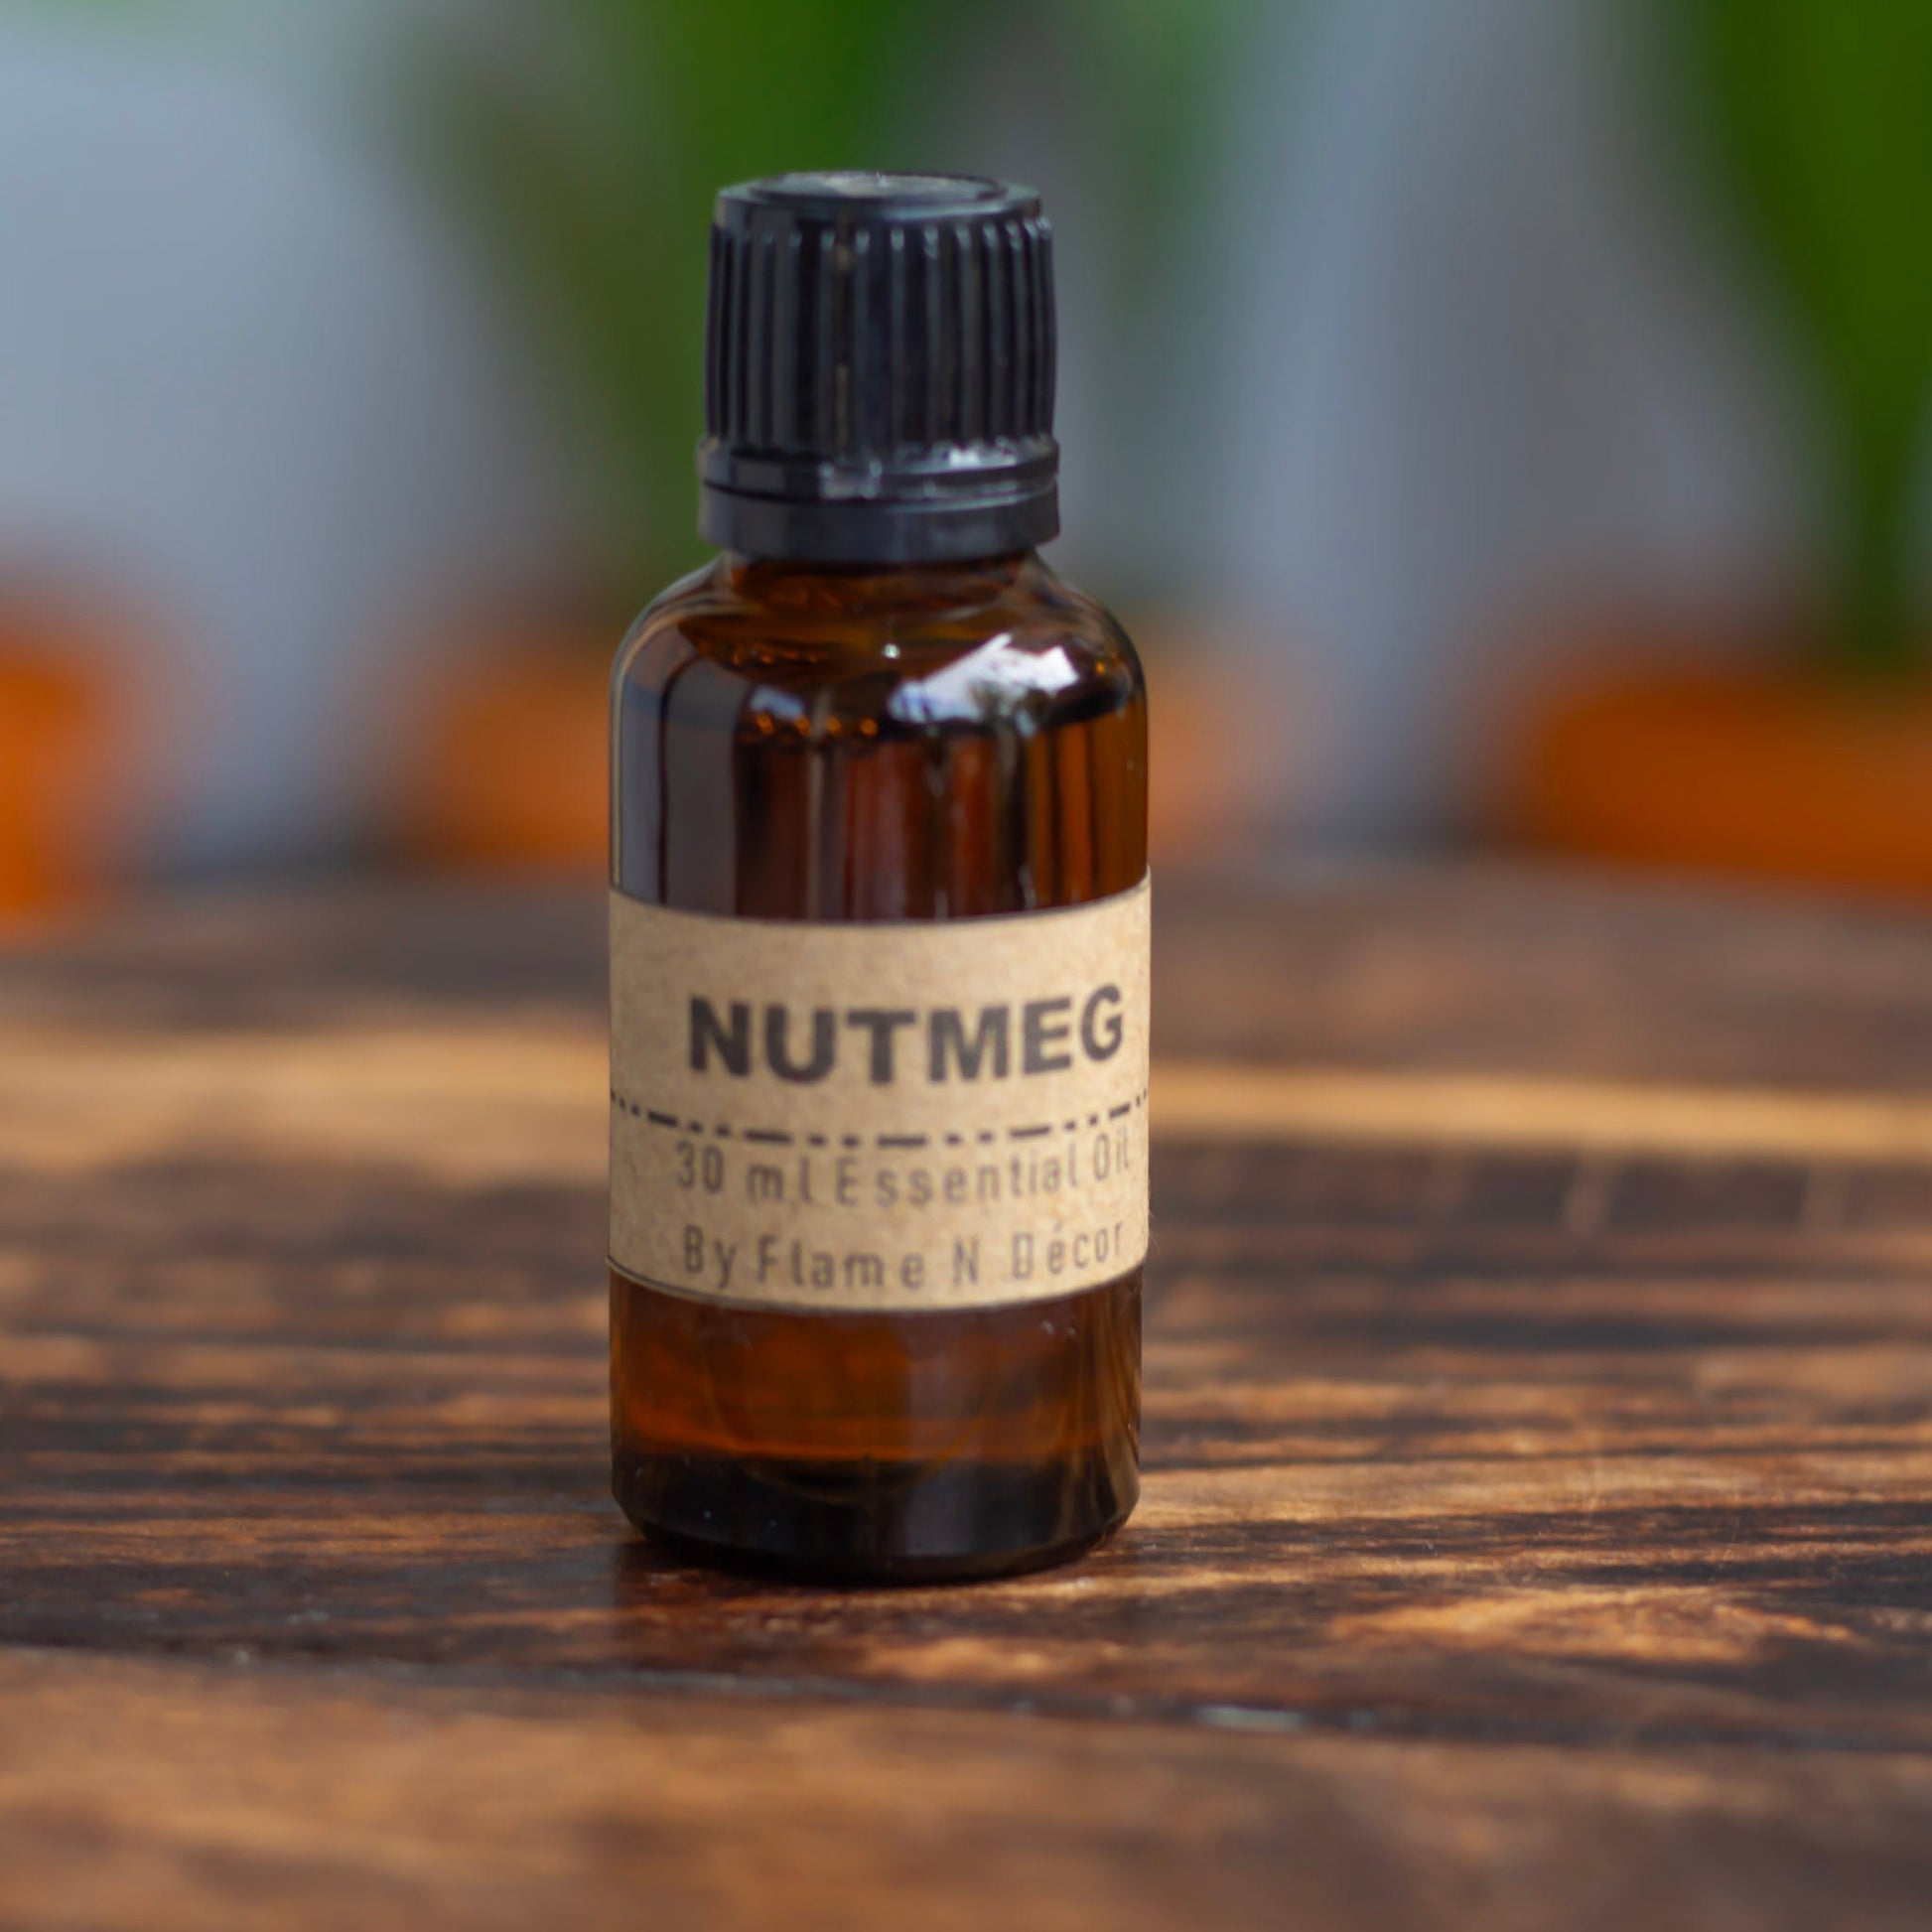 Nutmeg Essential Oil 15ml